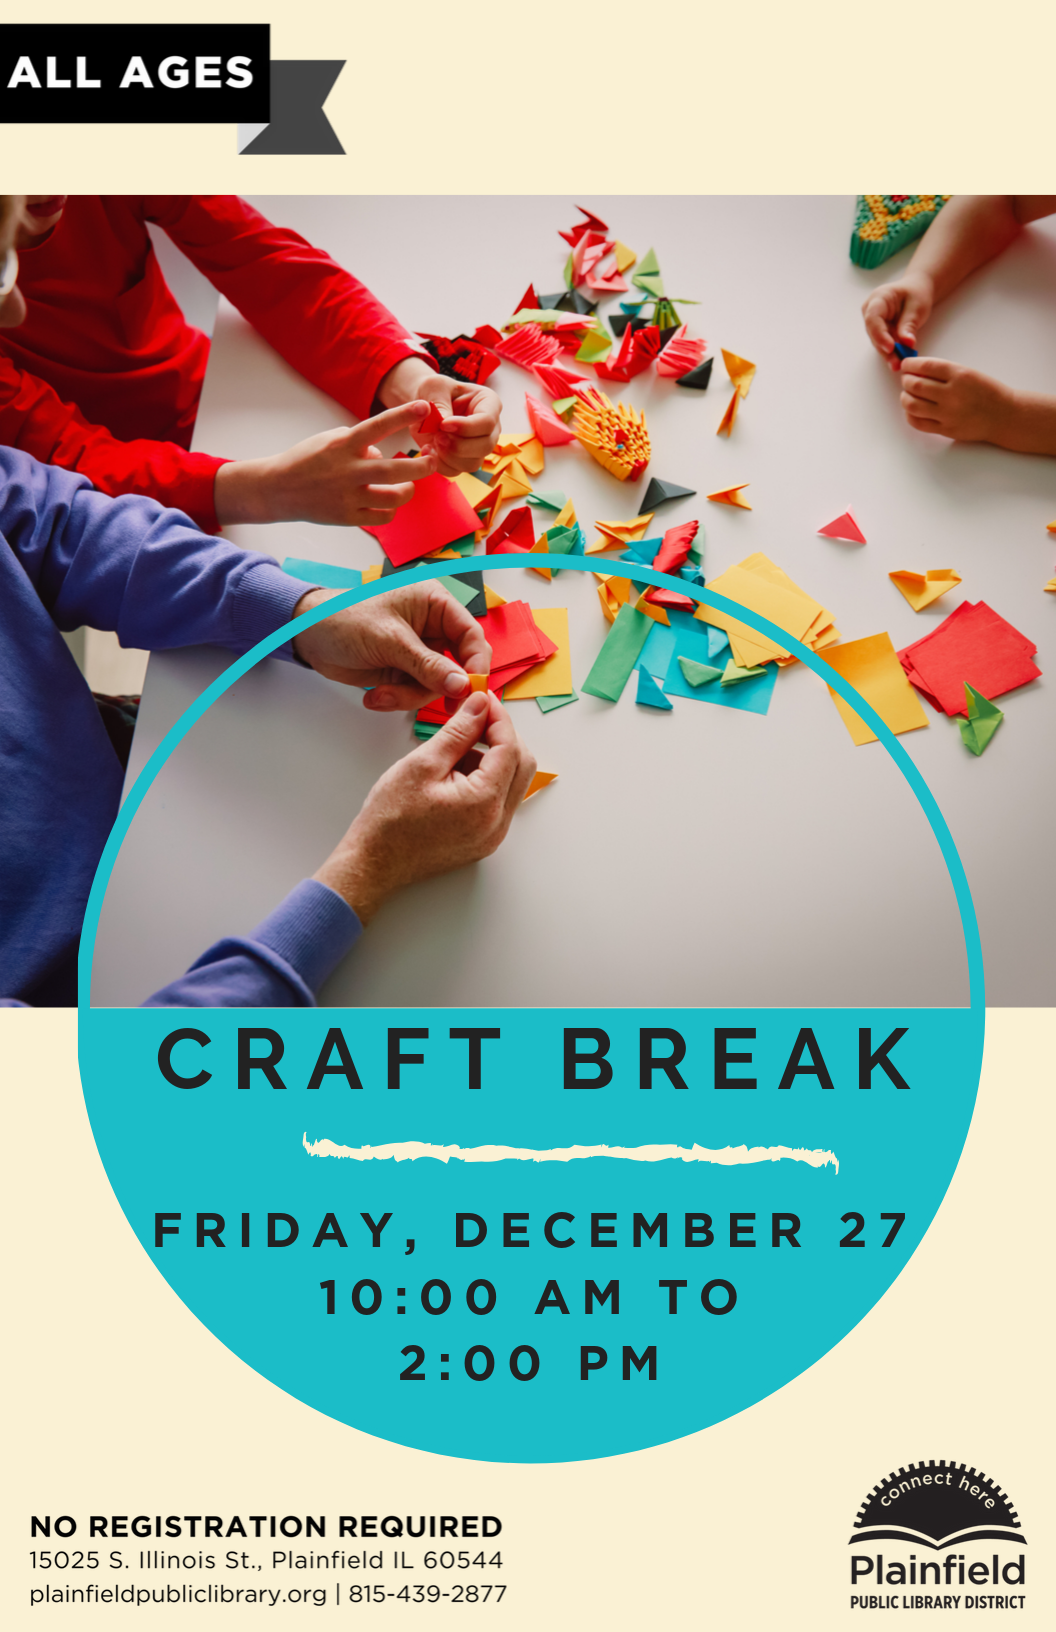 Craft Break